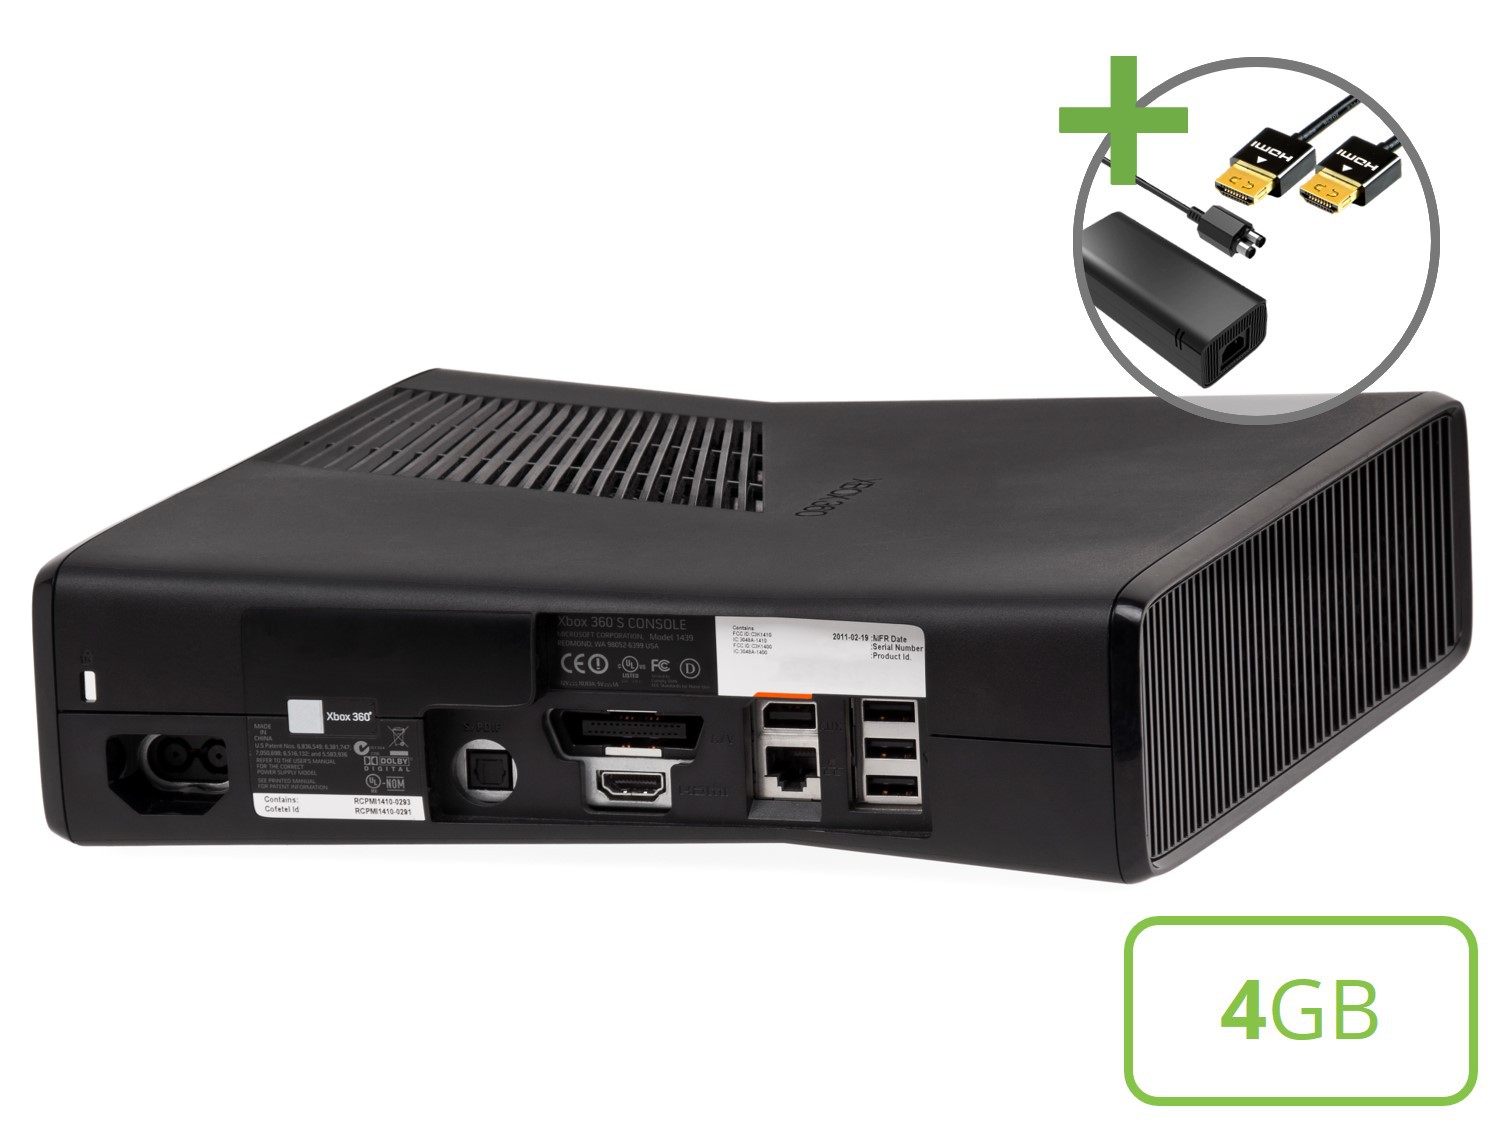 Microsoft Xbox 360 Slim Starter Pack - 4GB Standard Edition - Xbox 360 Hardware - 3